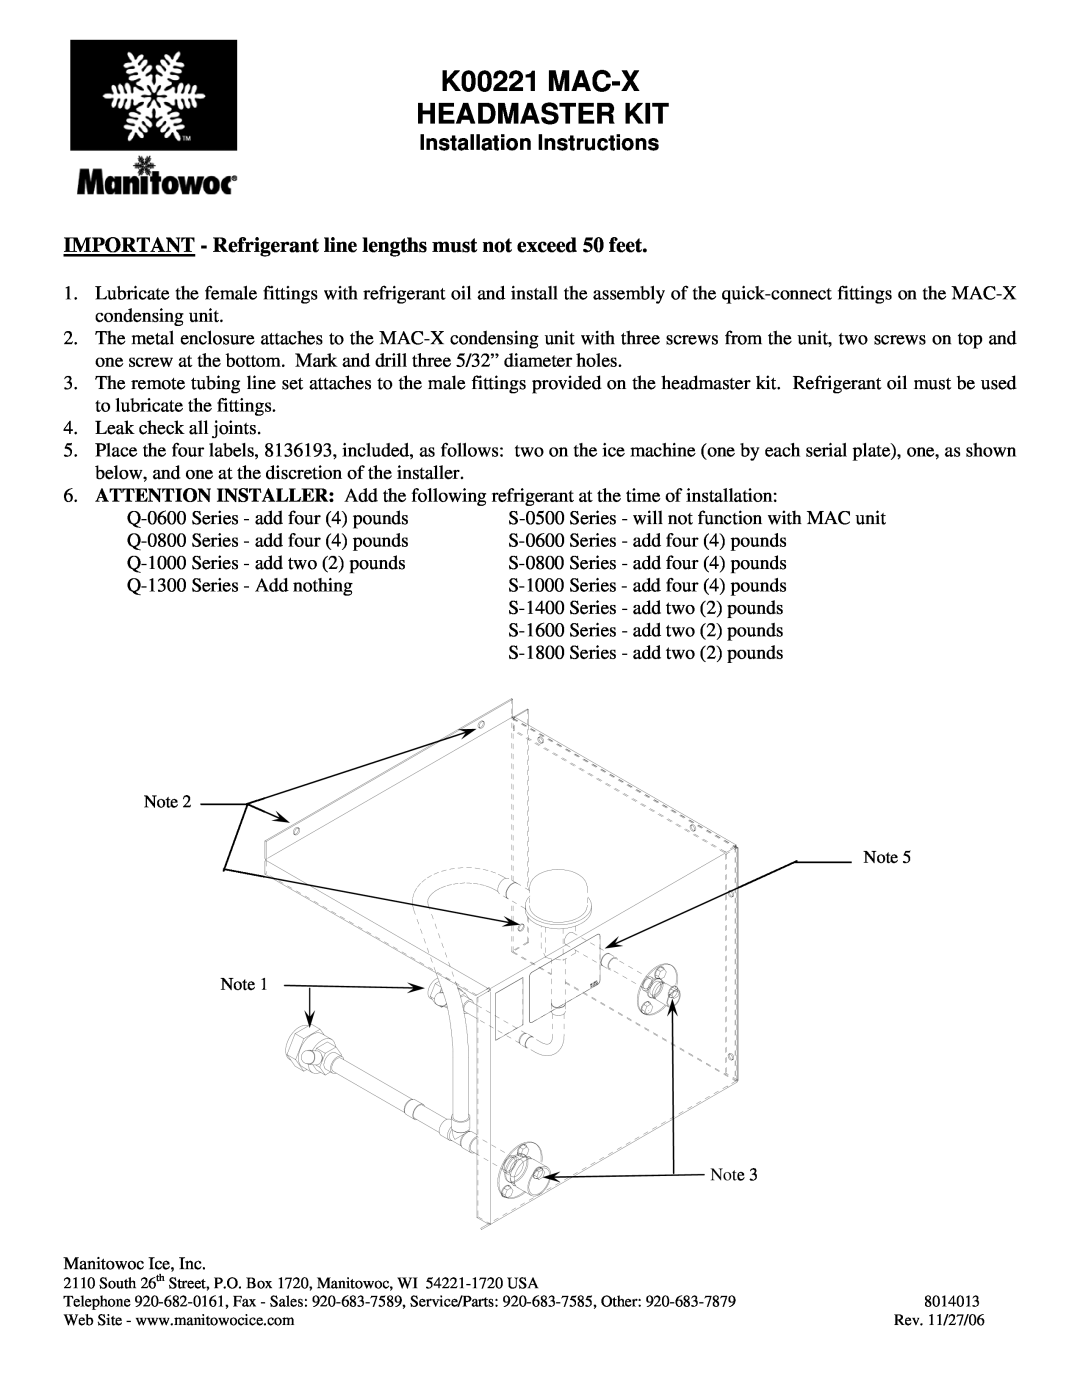 Manitowoc Ice installation instructions K00221 MAC-X HEADMASTER KIT, Installation Instructions 